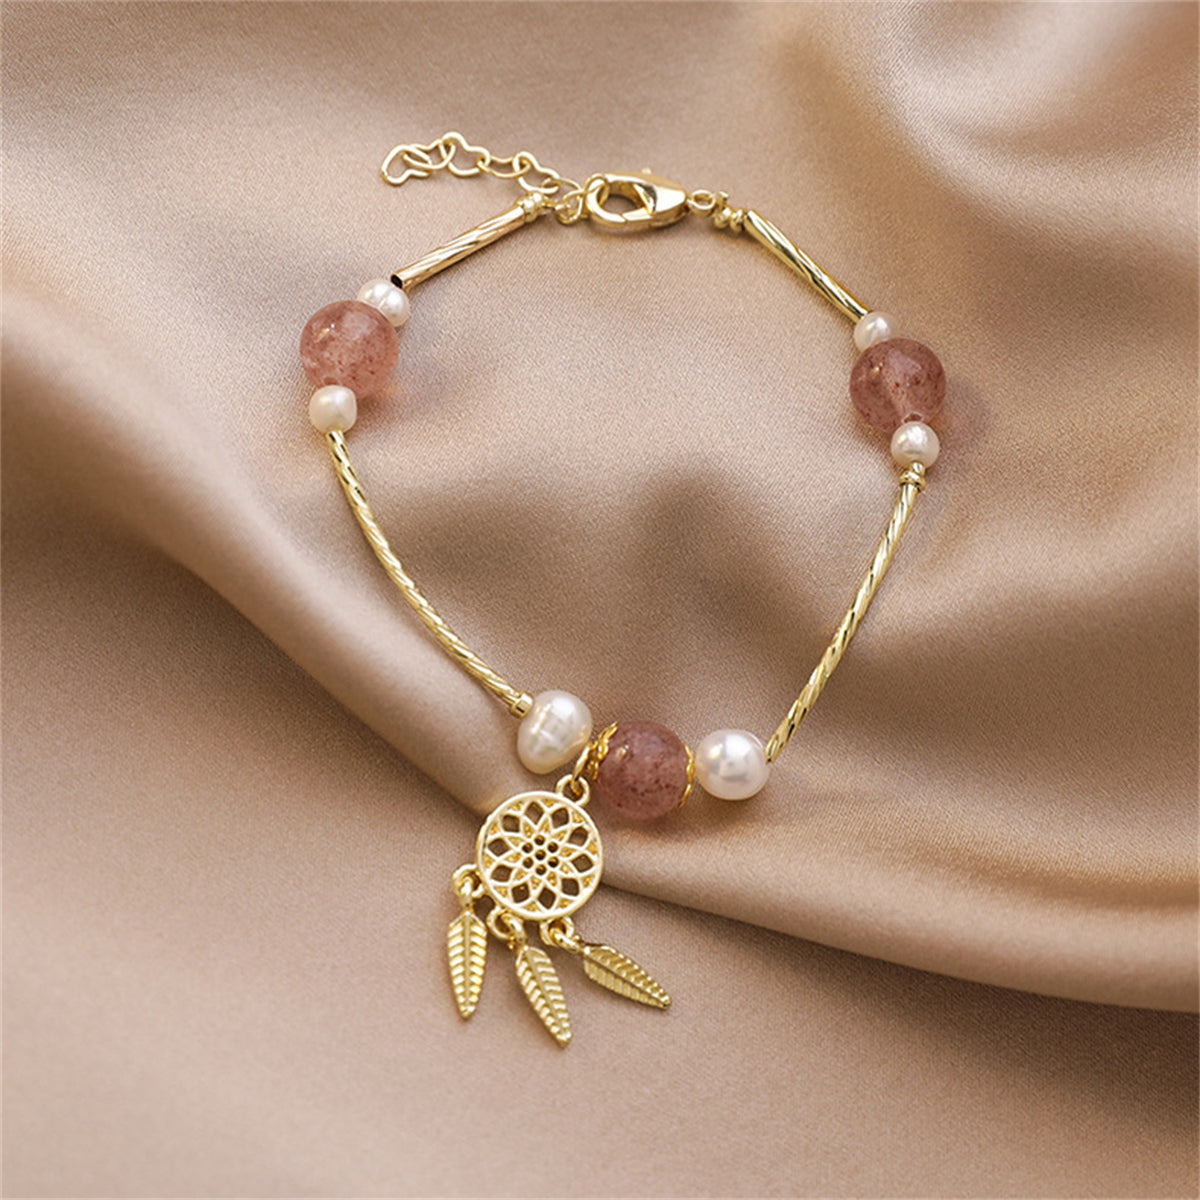 Crystal & Pearl 18K Gold-Plated Dreamcatcher Charm Bracelet